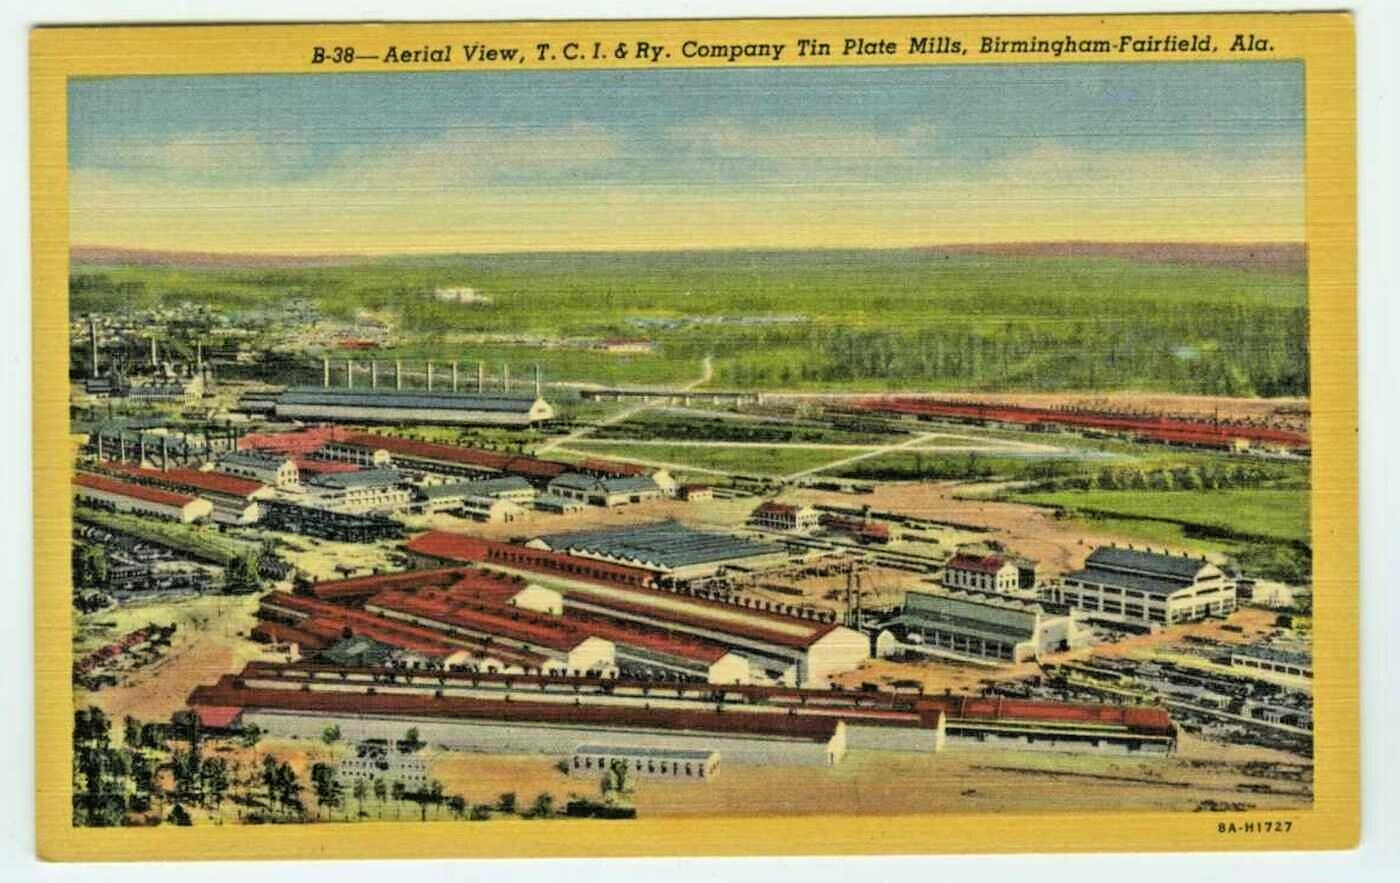 Birmingham-Fairfield Alabama T.C.I. & Ry Company Tin Plate Mills Aerial View